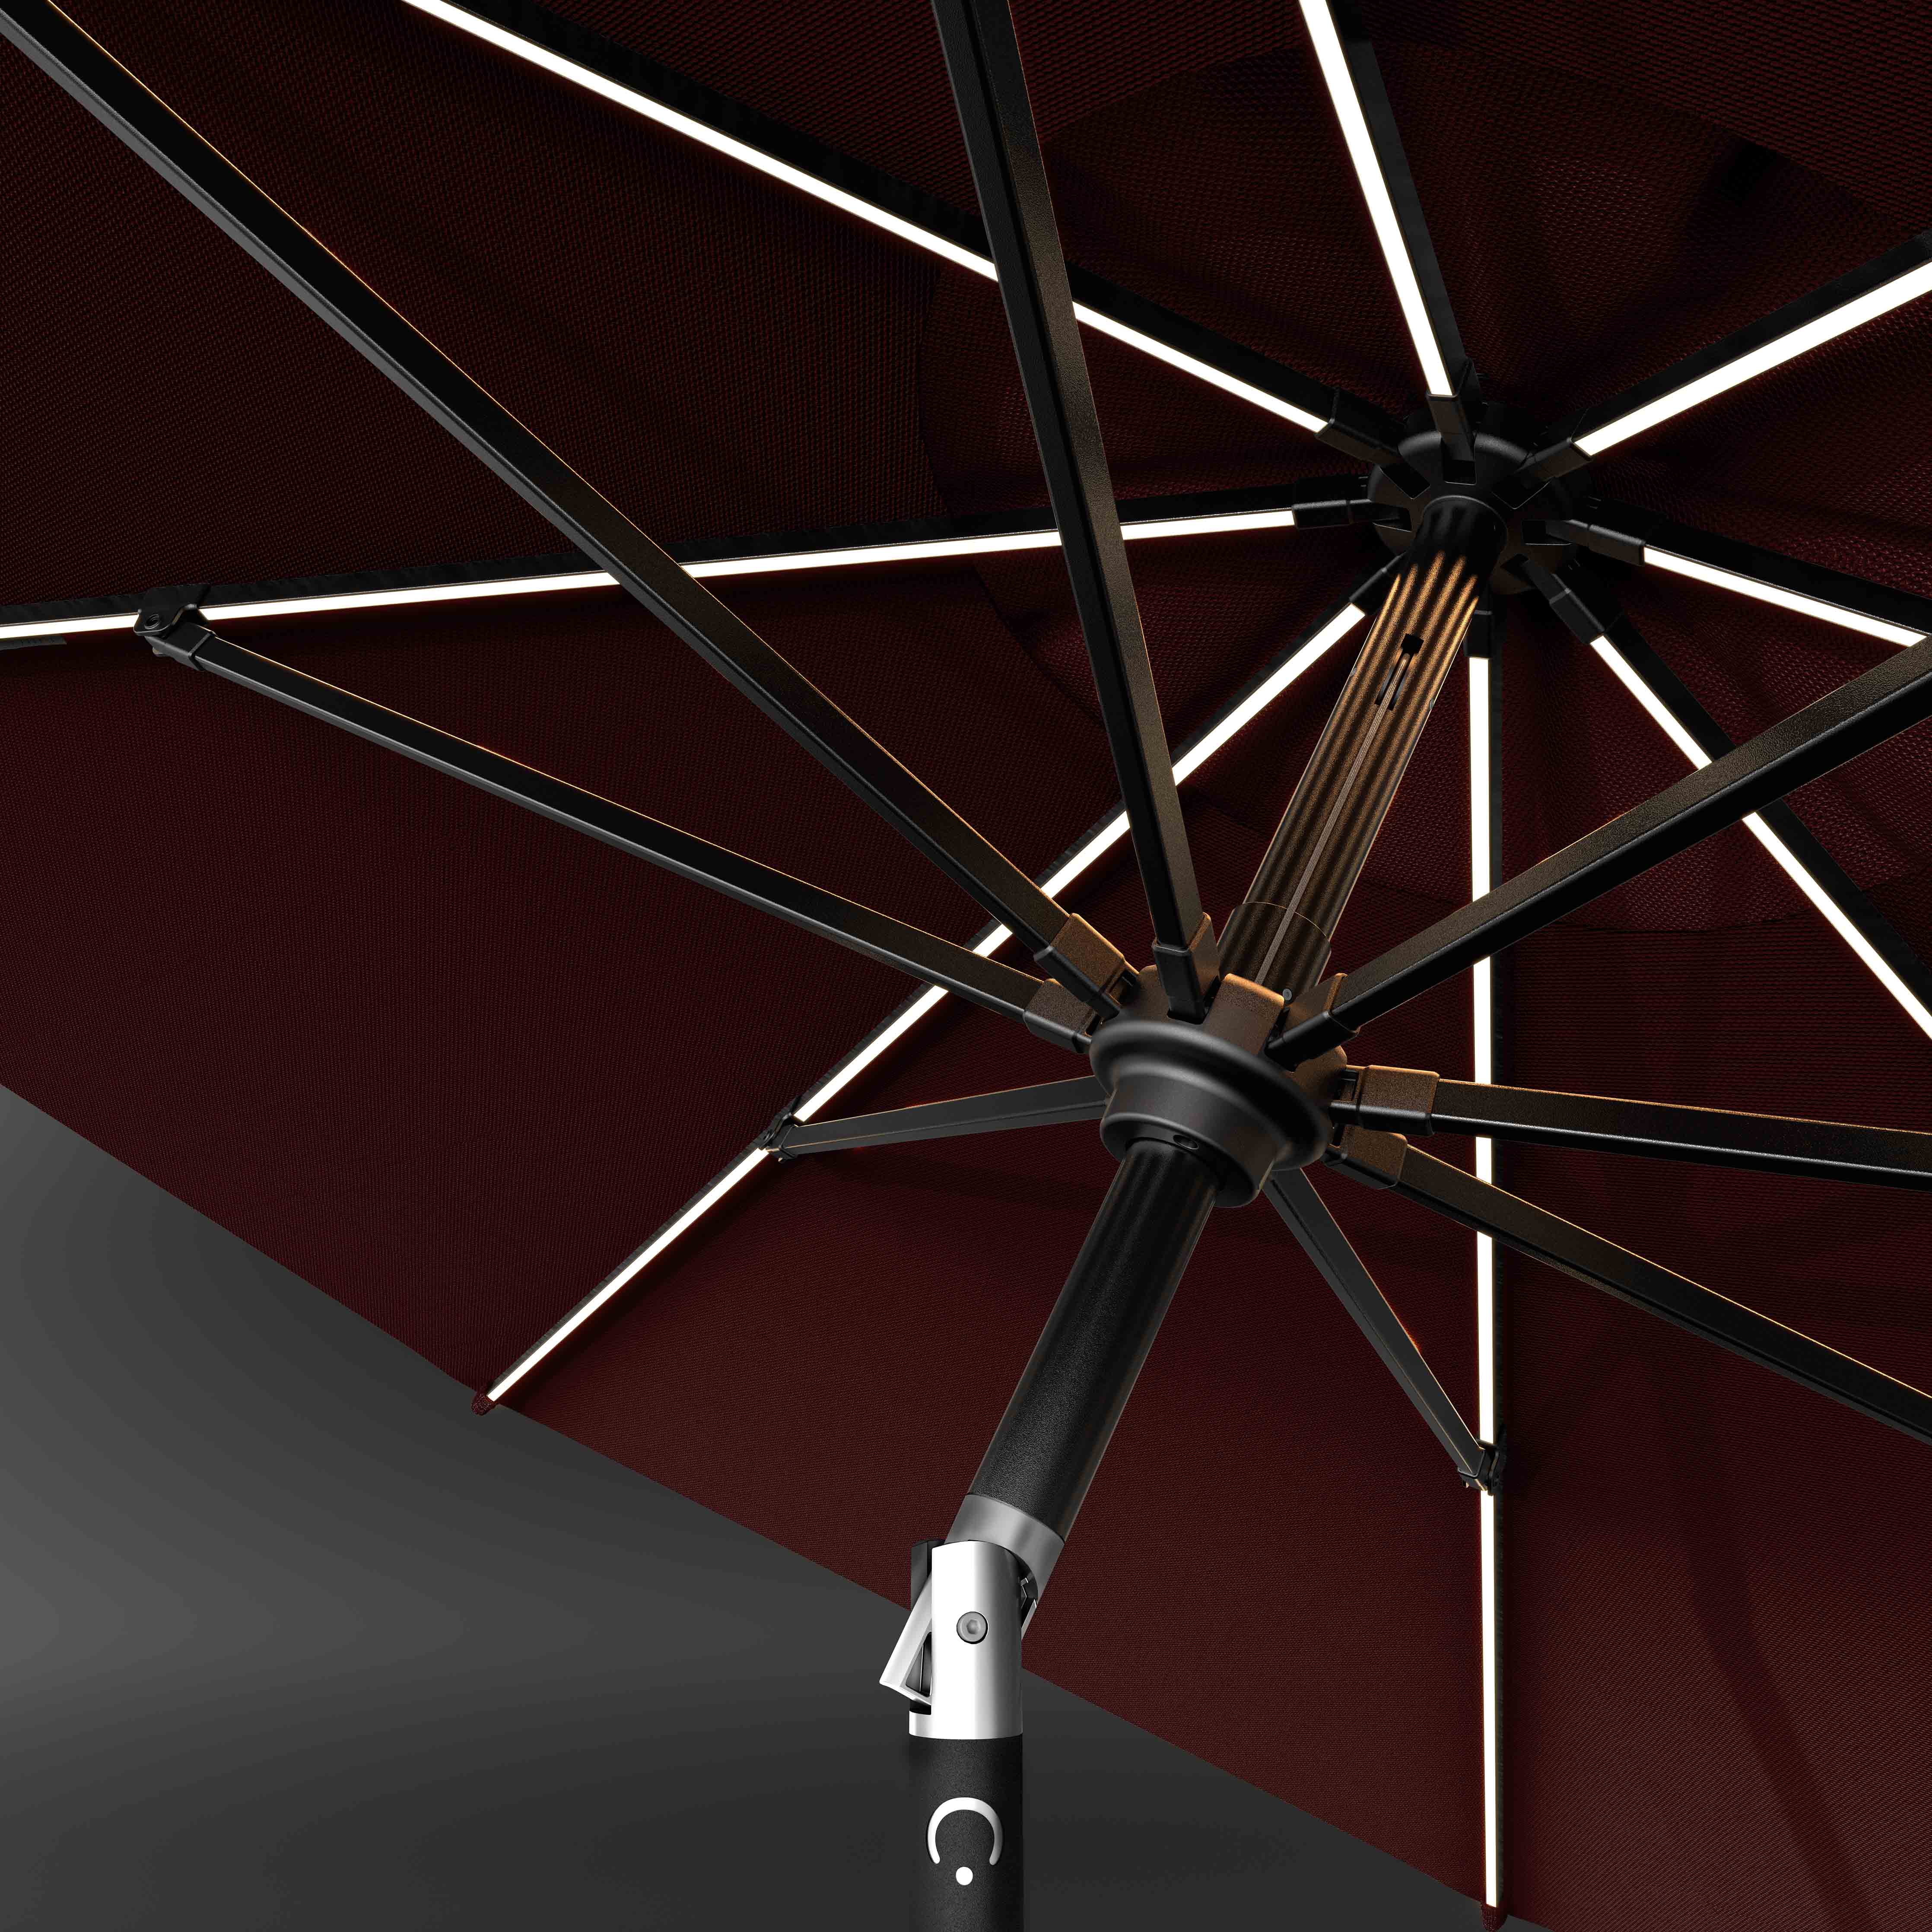 The LED Swilt™ - Sunbrella Burgundy